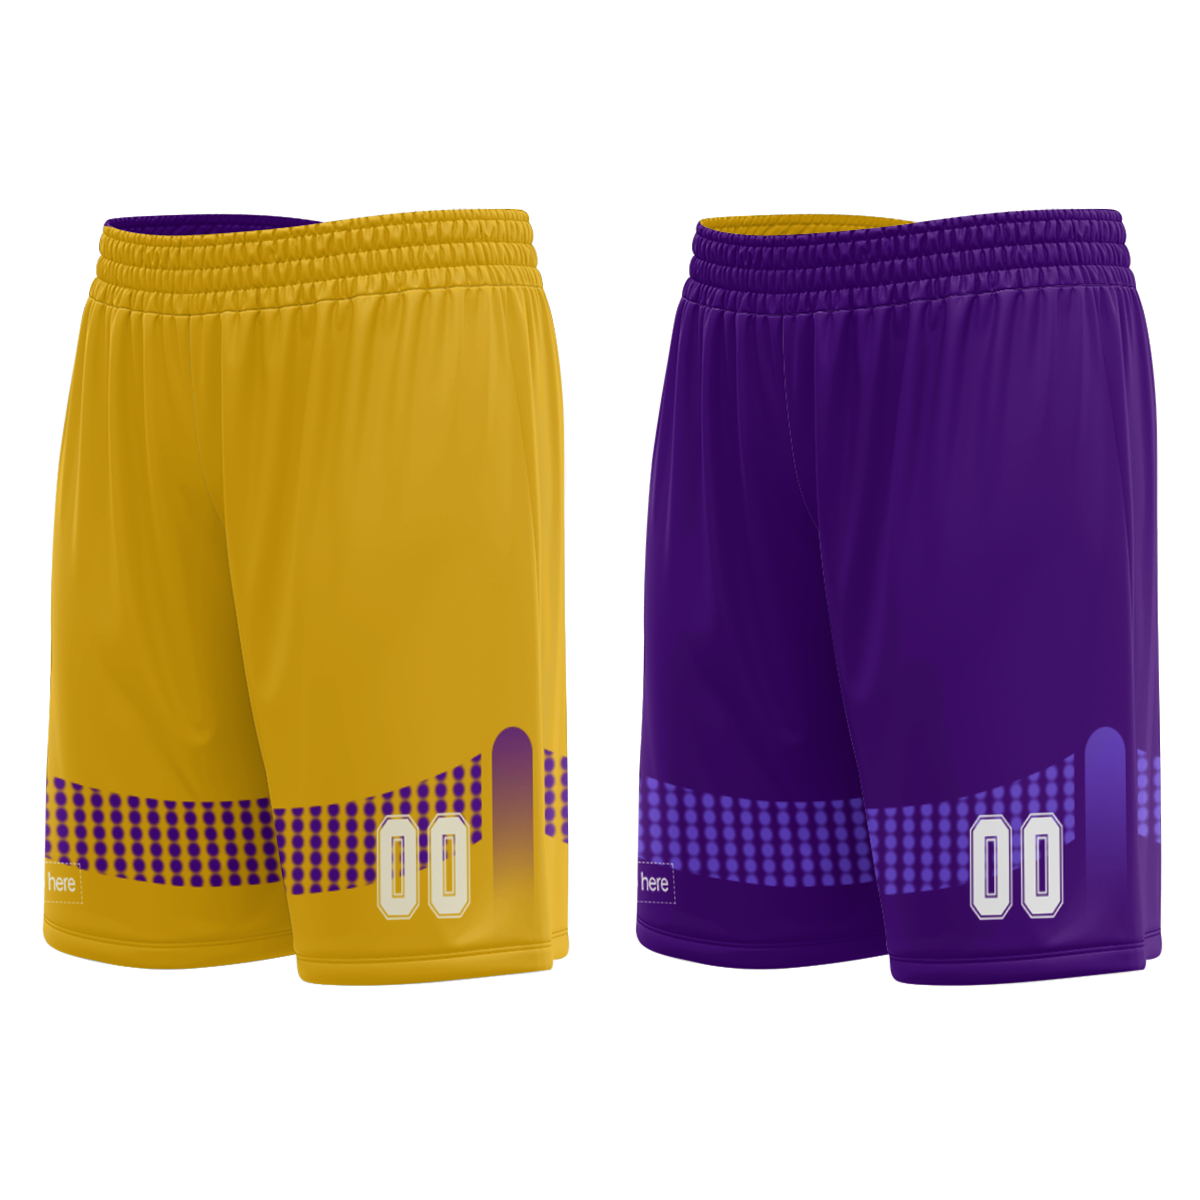 oem-service-custom-cool-design-new-style-basketball-jerseys-quick-dry-basketball-uniforms-at-cj-pod-8